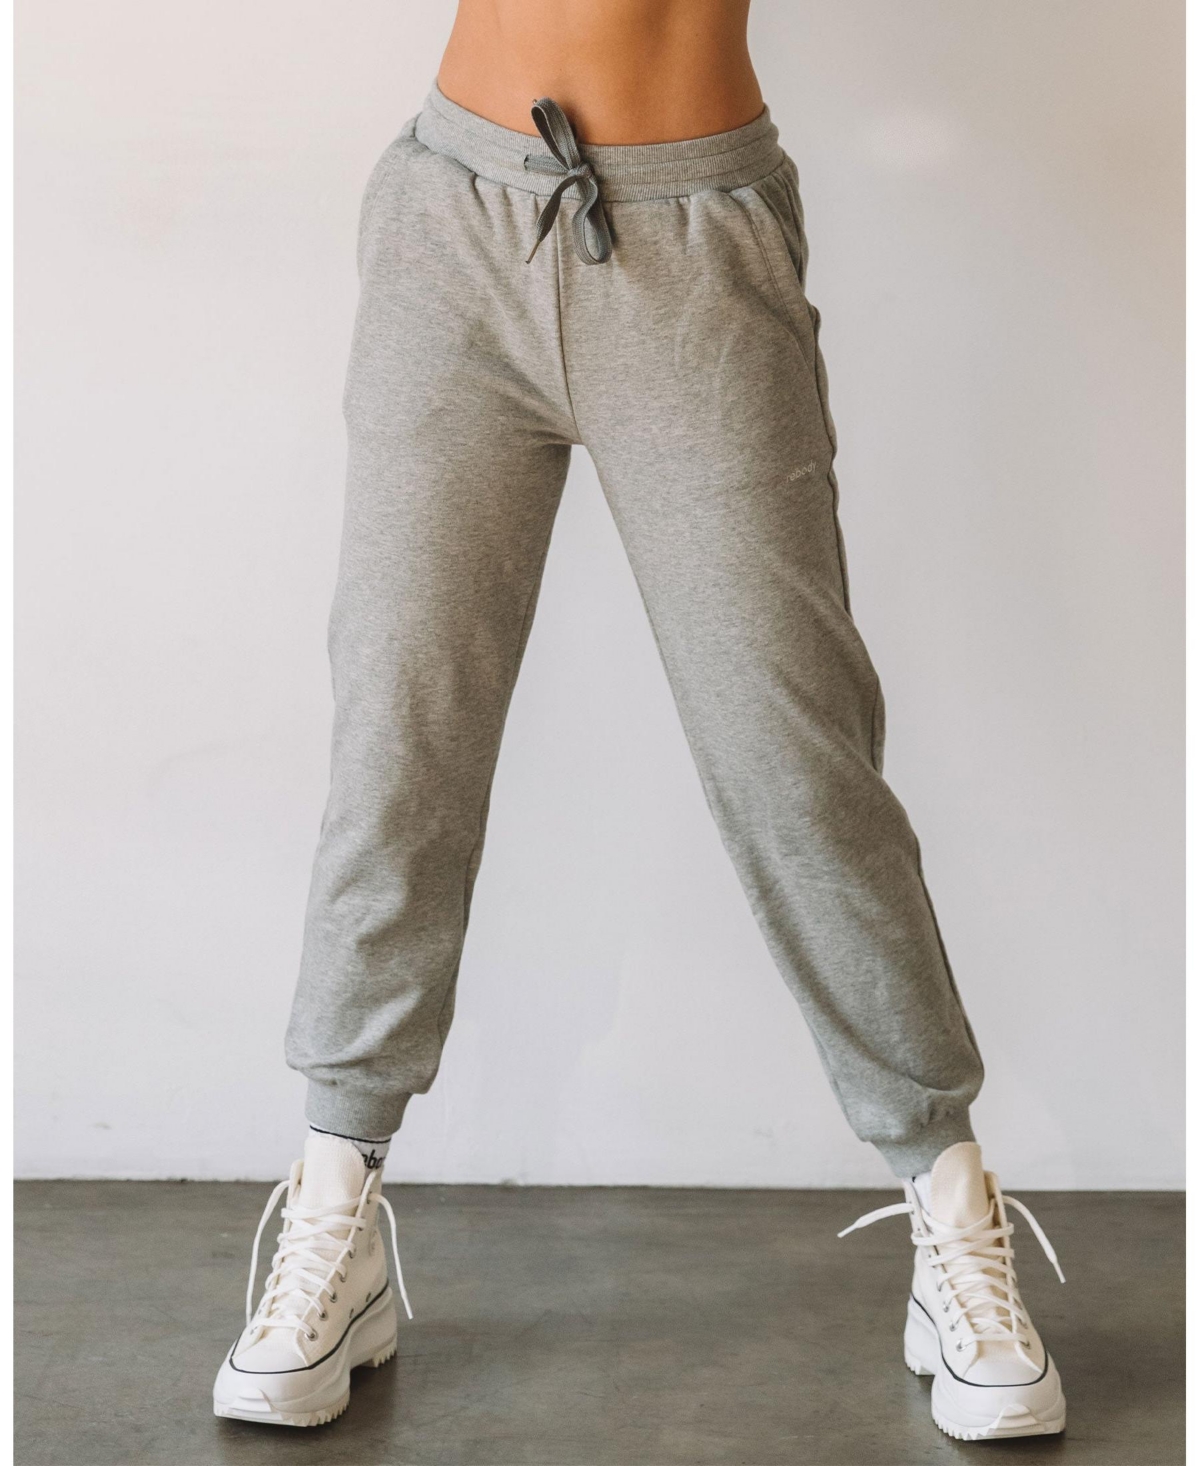 Women's Rebody Lifestyle French Terry Sweatpants for Women - Heather grey/white